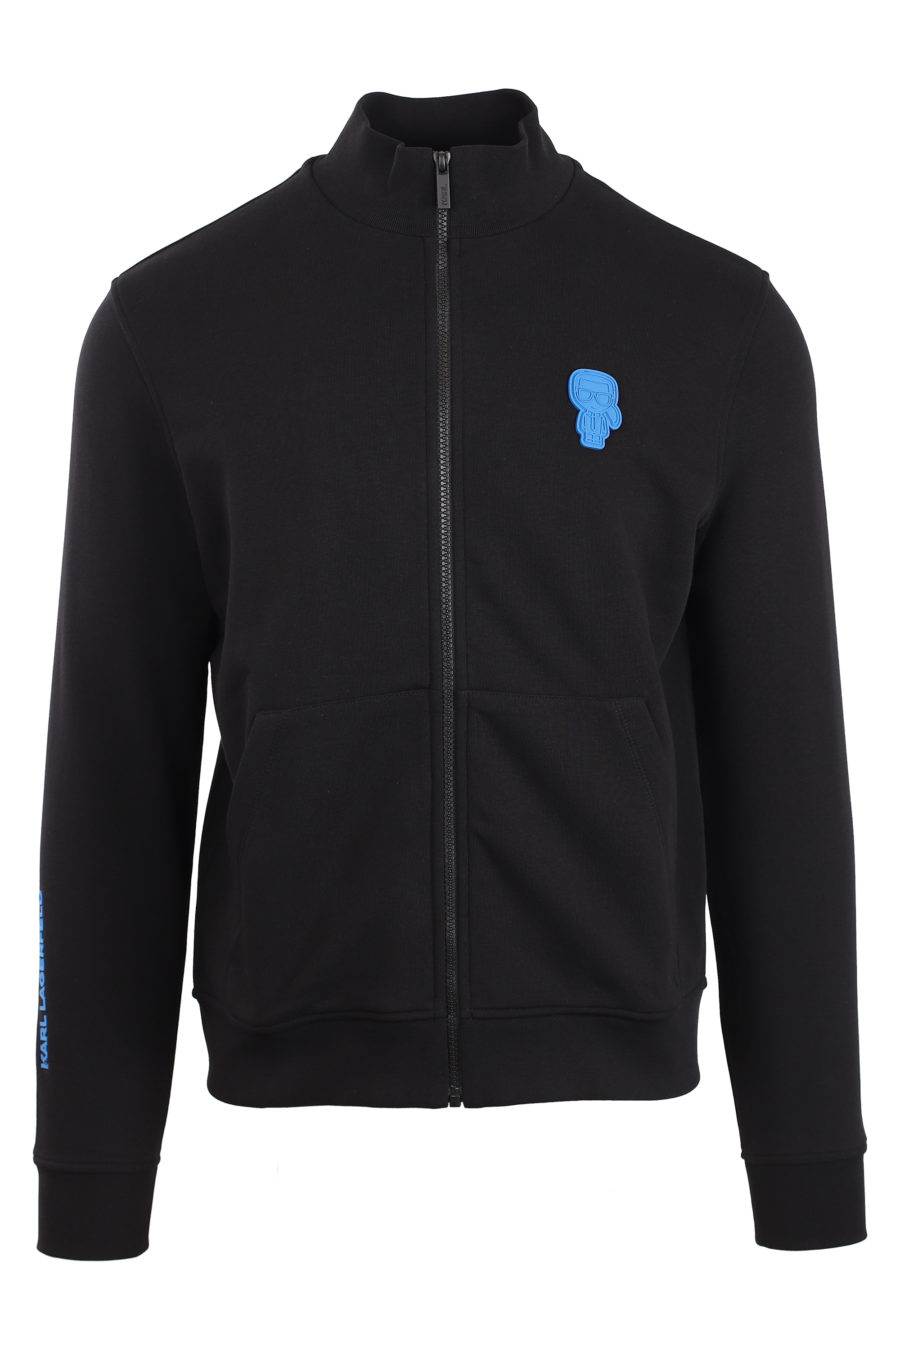 Black jacket with small blue logo - IMG 0902